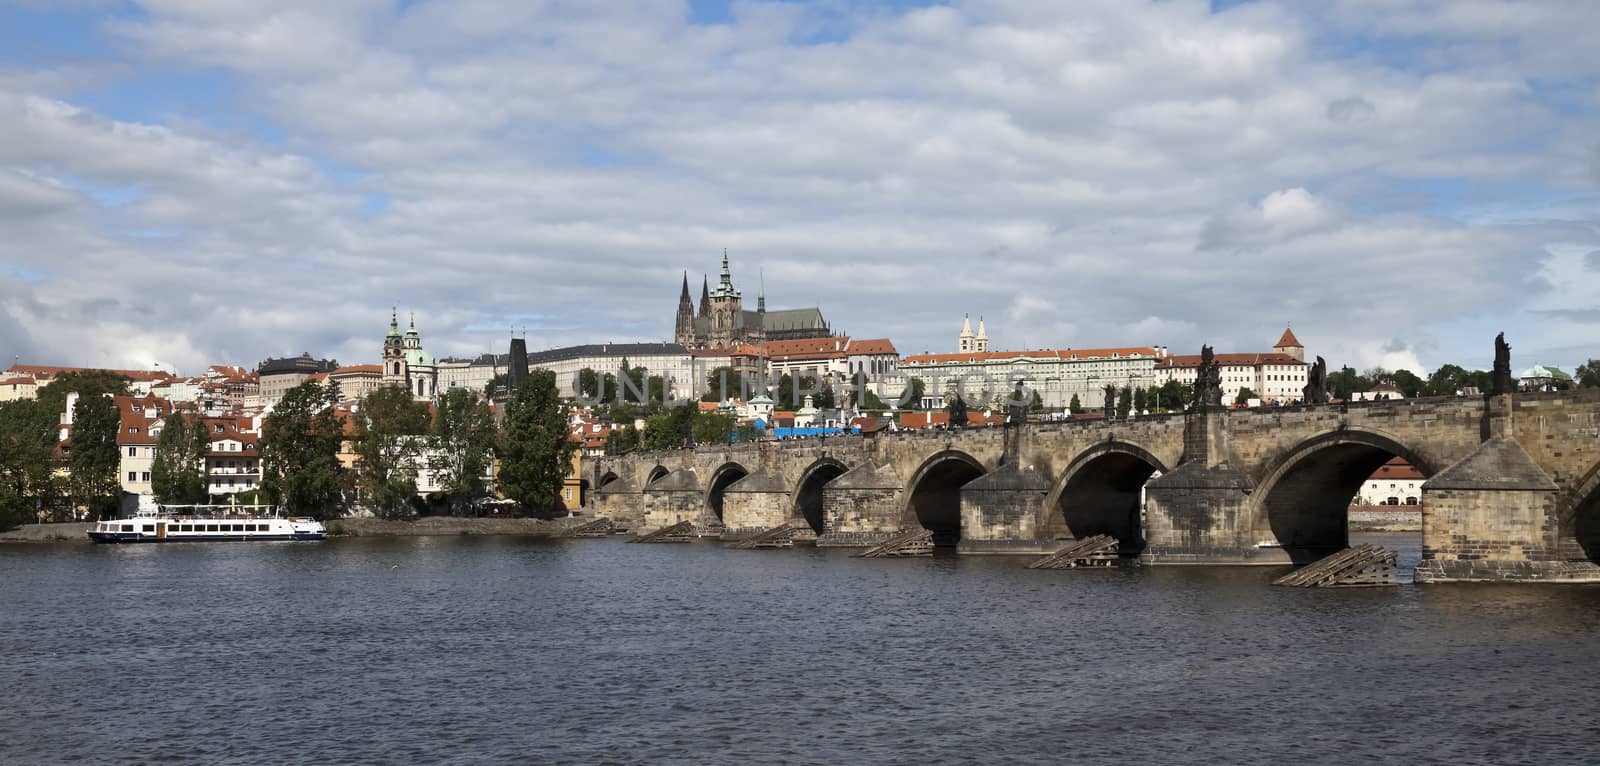 The Prague Castle and the Charles bridge